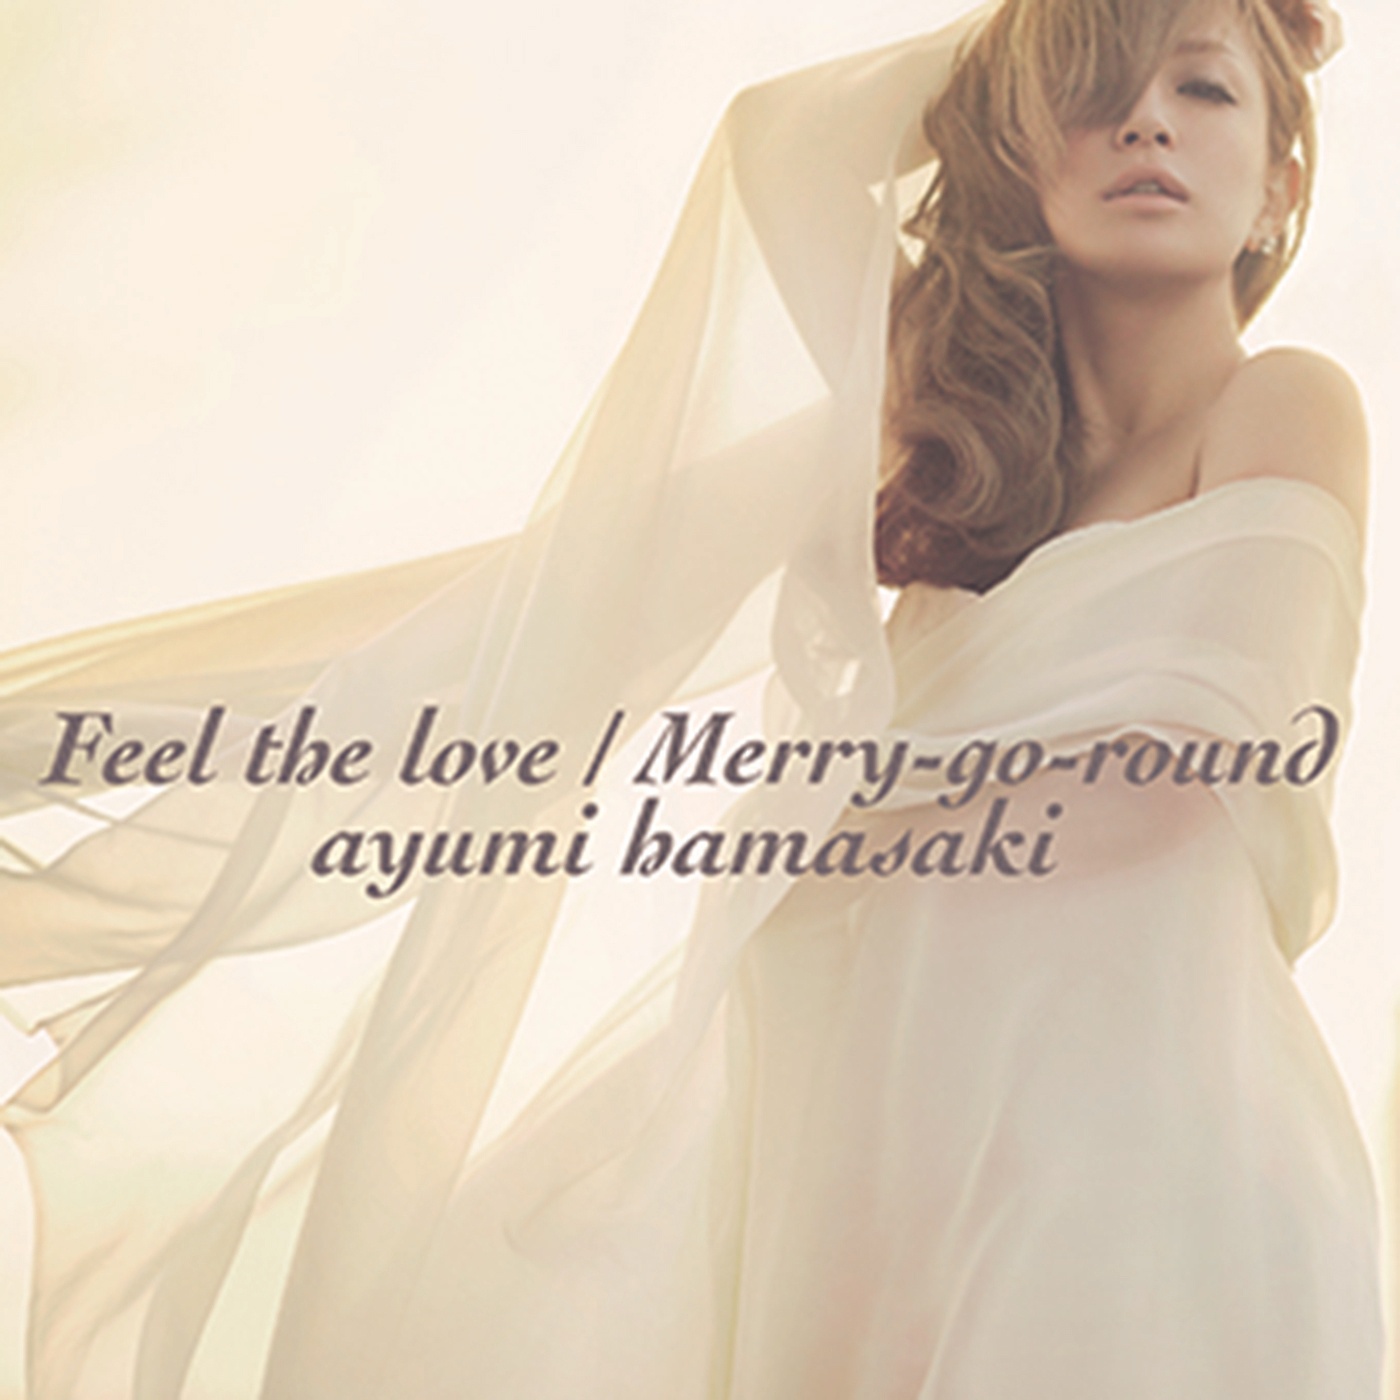 Feel the love/Merry-go-round